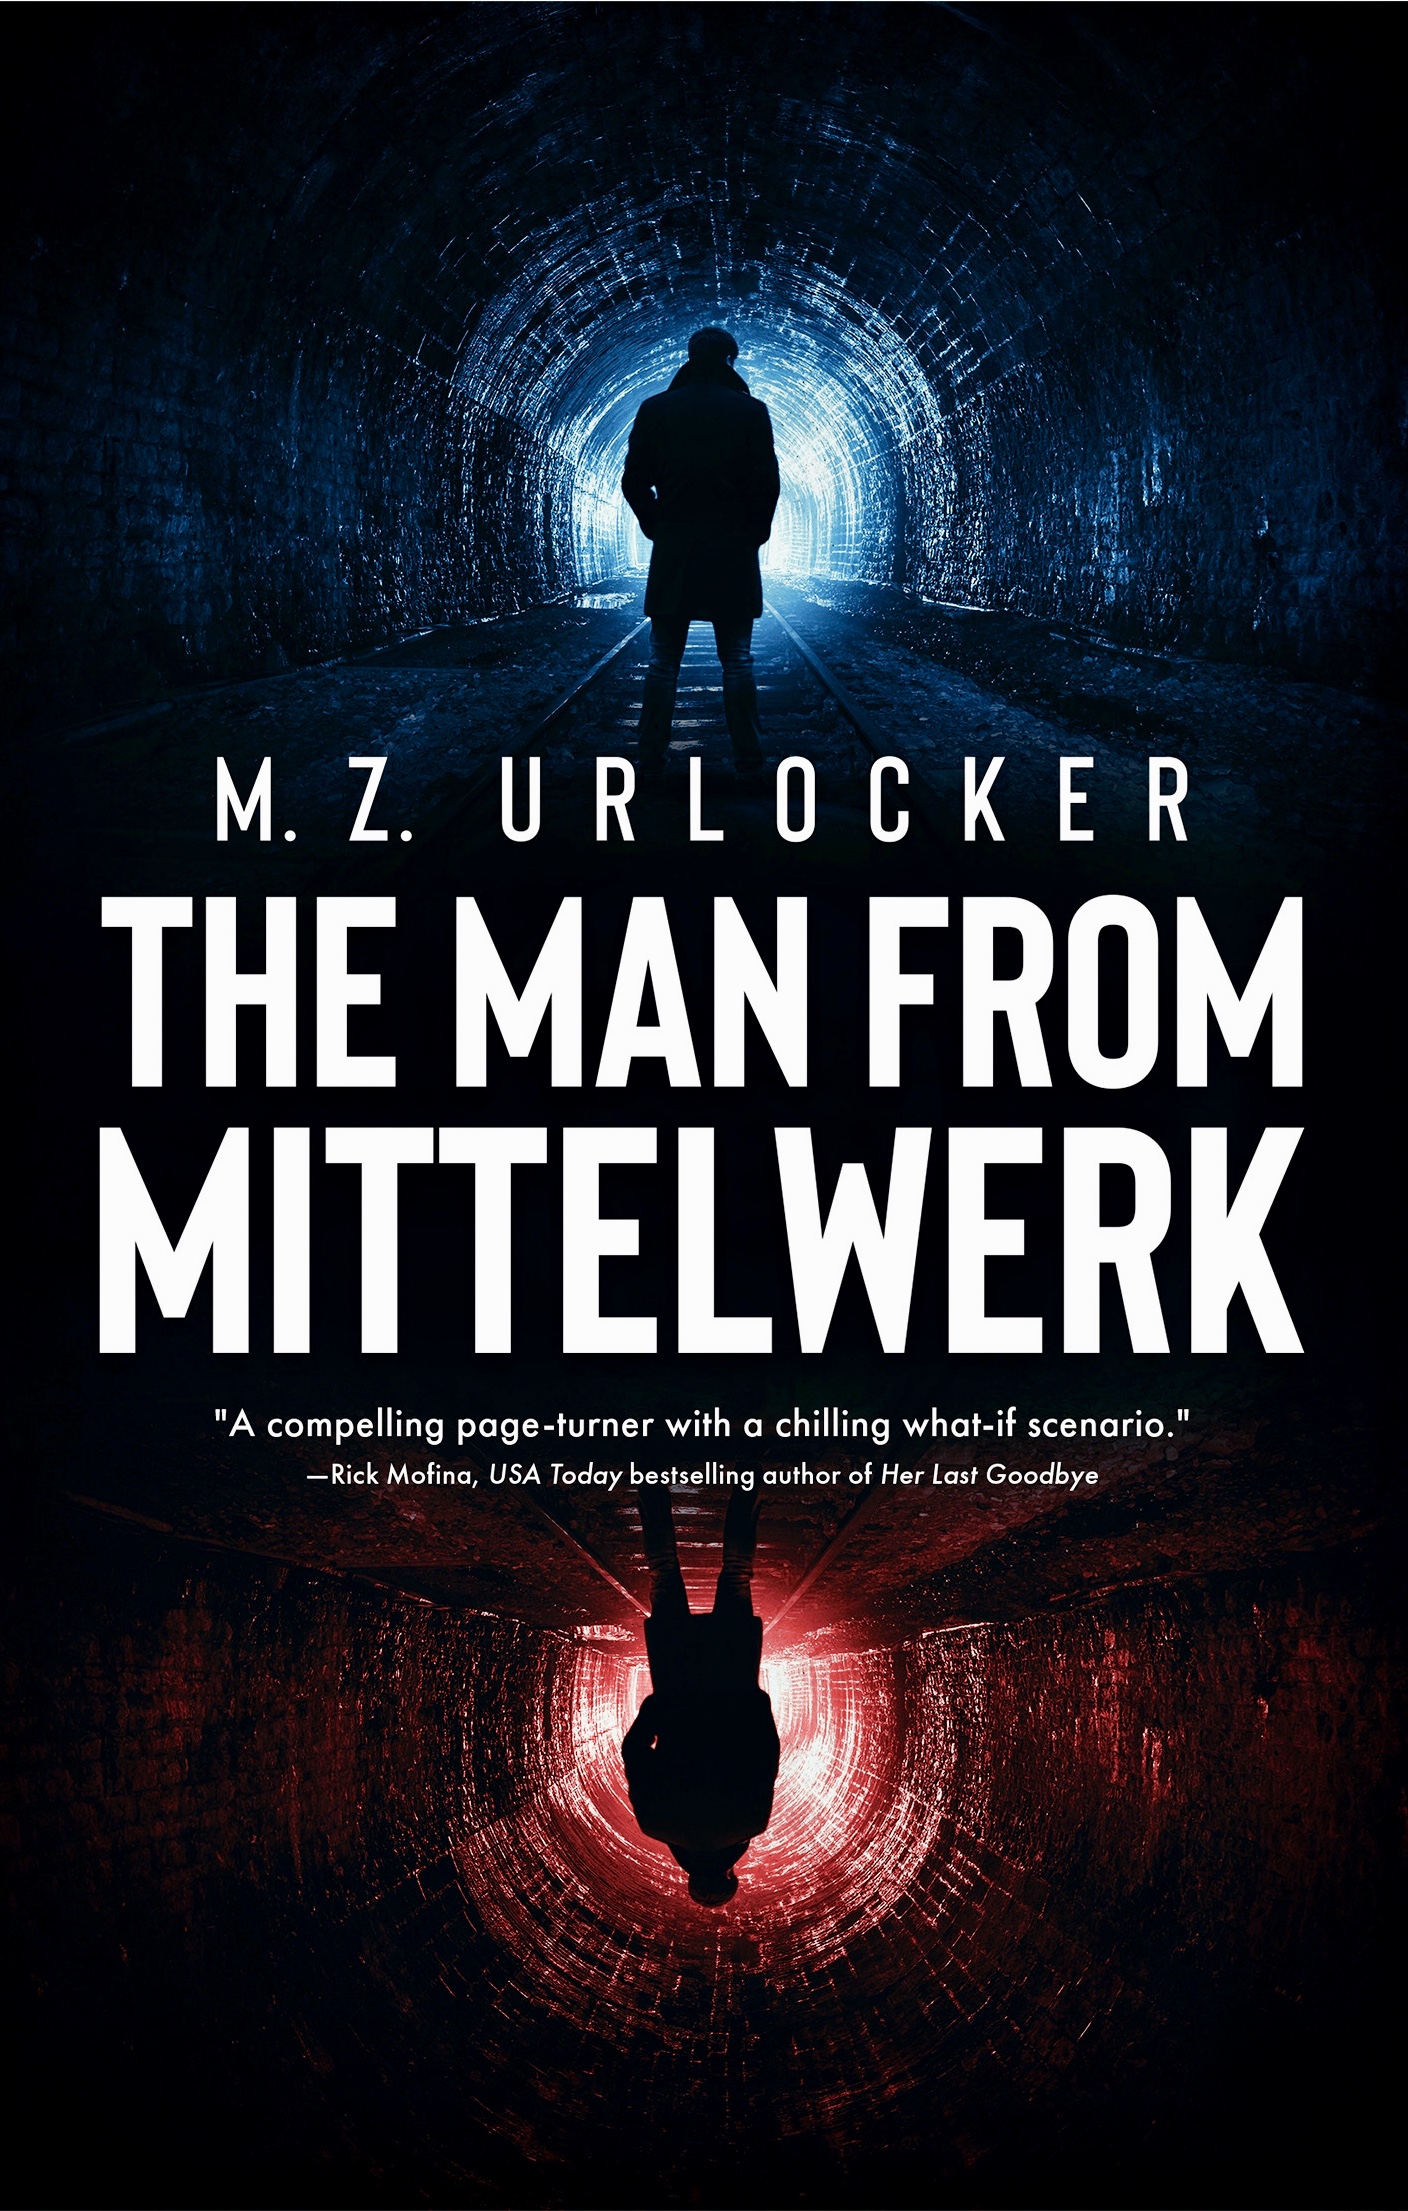 The Man from Mittelwerk